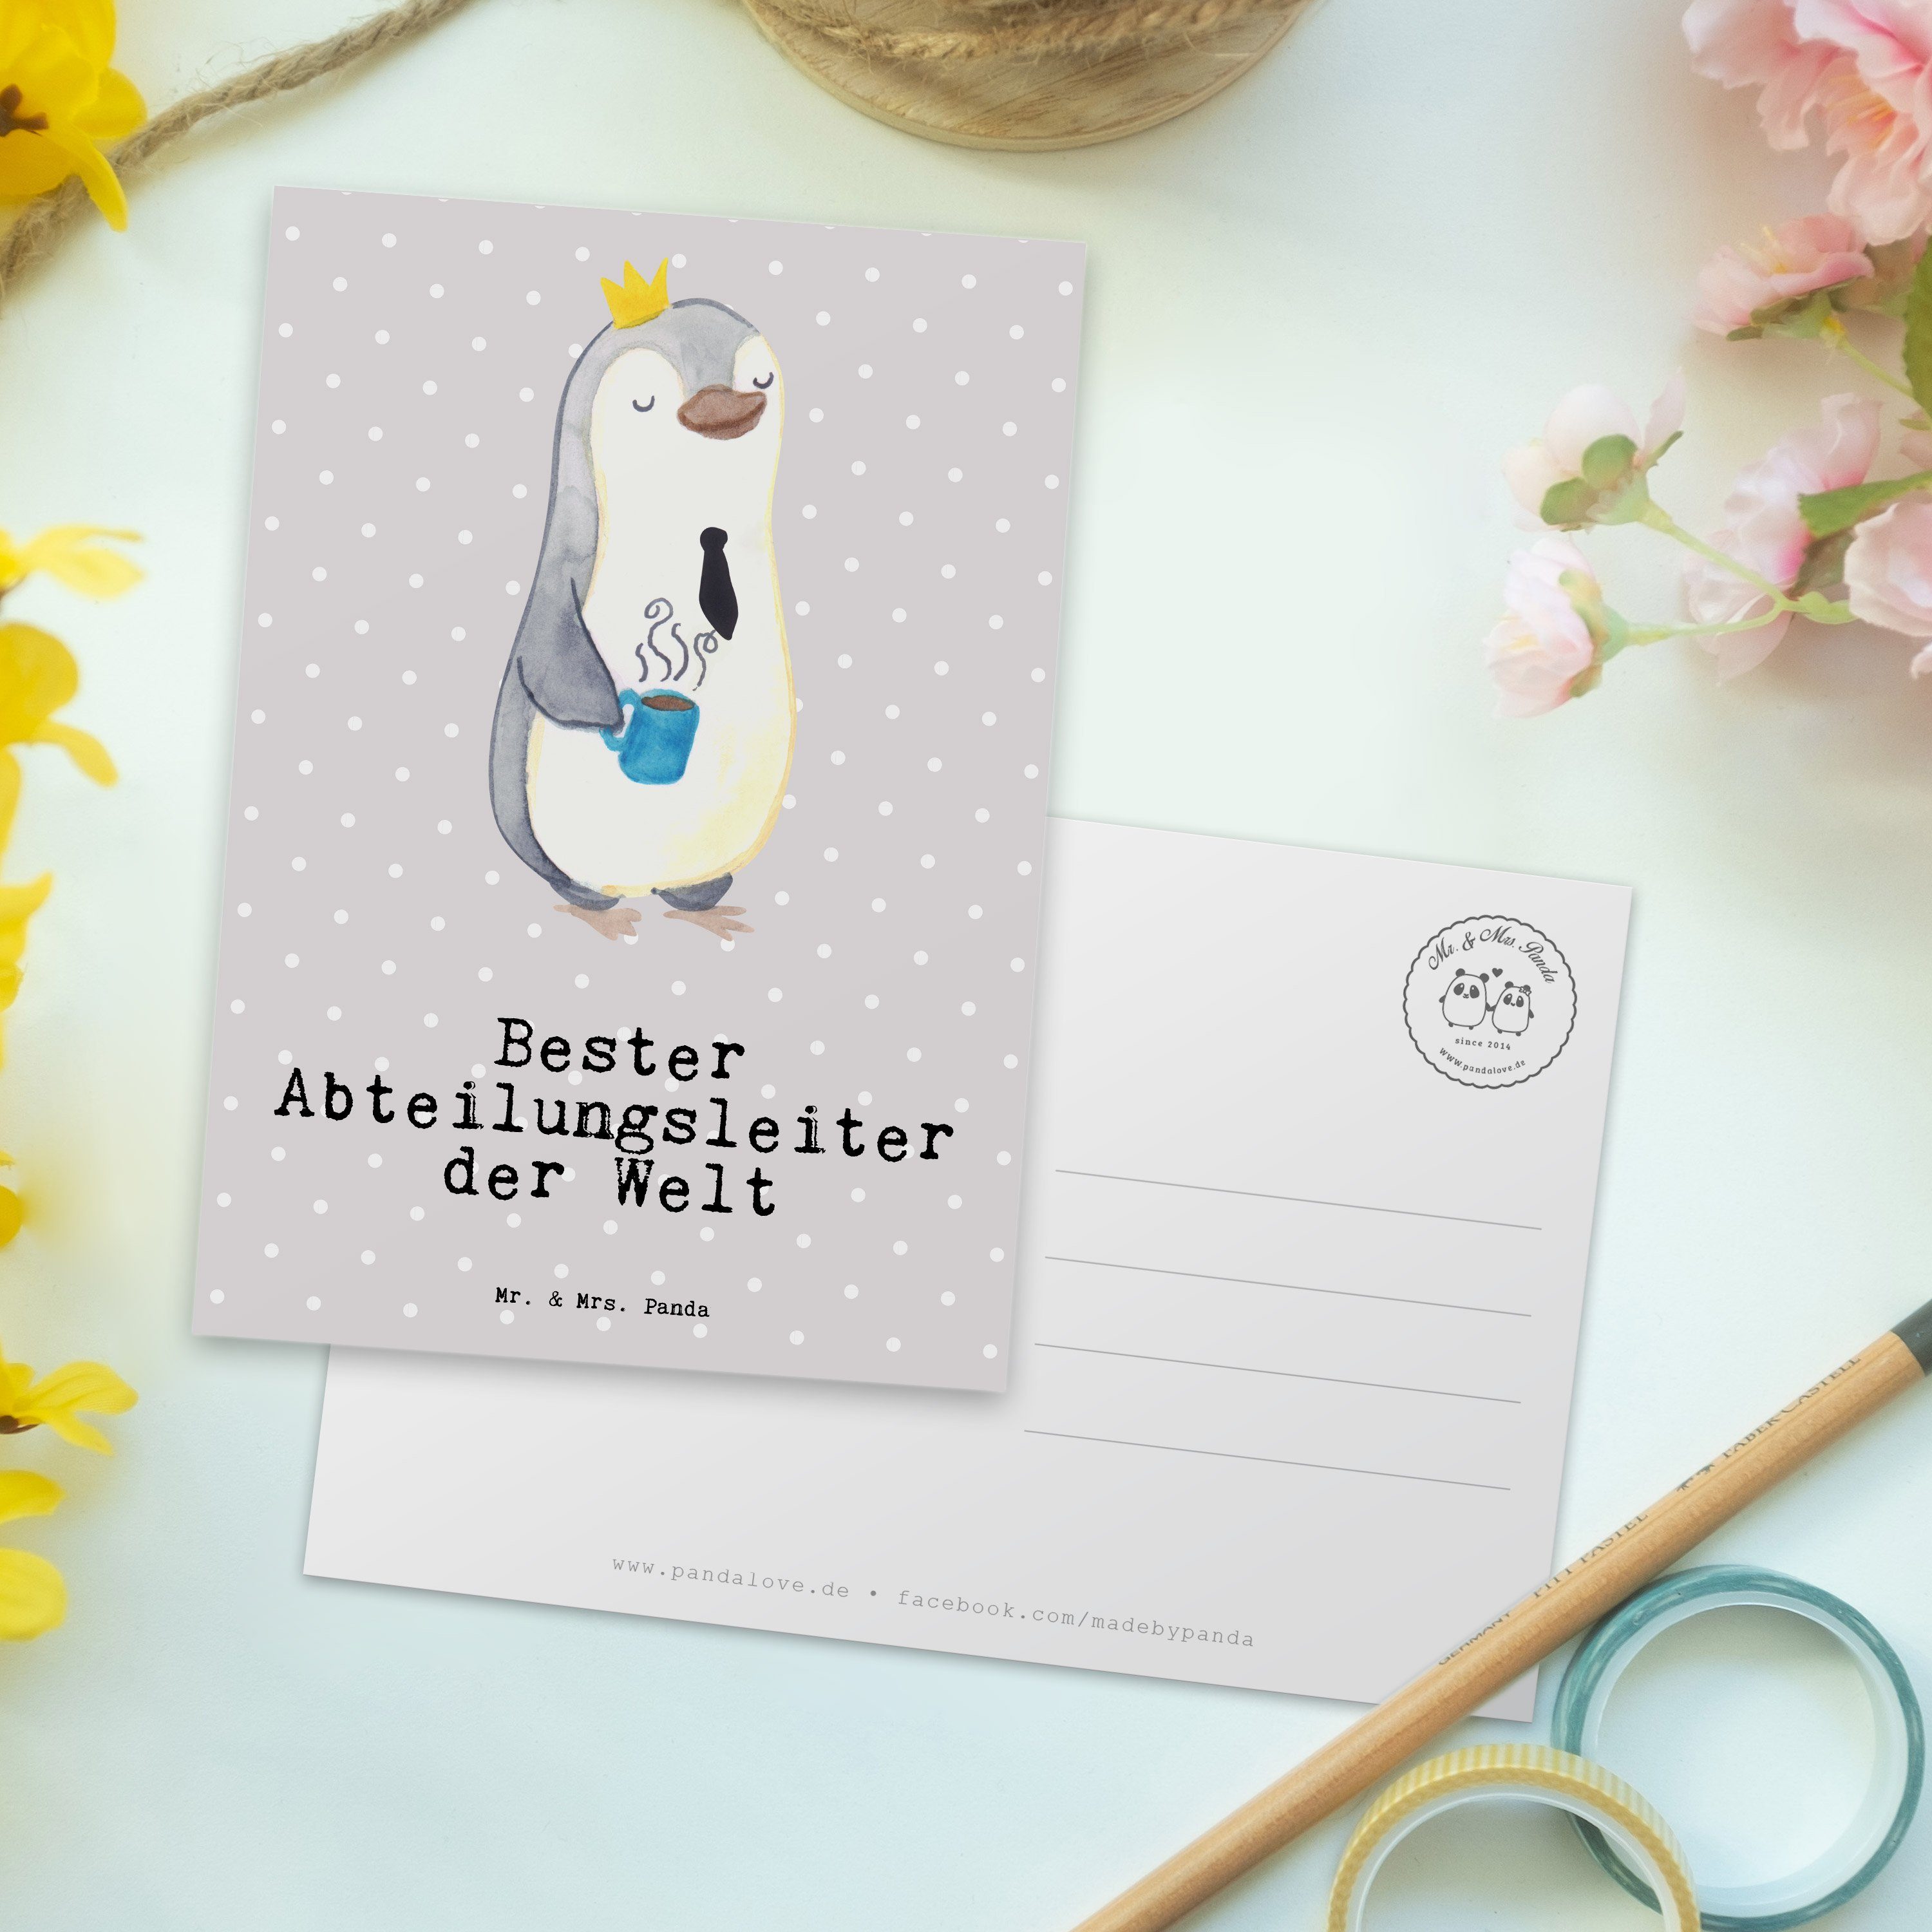 & Grau Welt - Pastell Panda Mrs. Mr. Bester - G Geschenk, Pinguin Abteilungsleiter der Postkarte